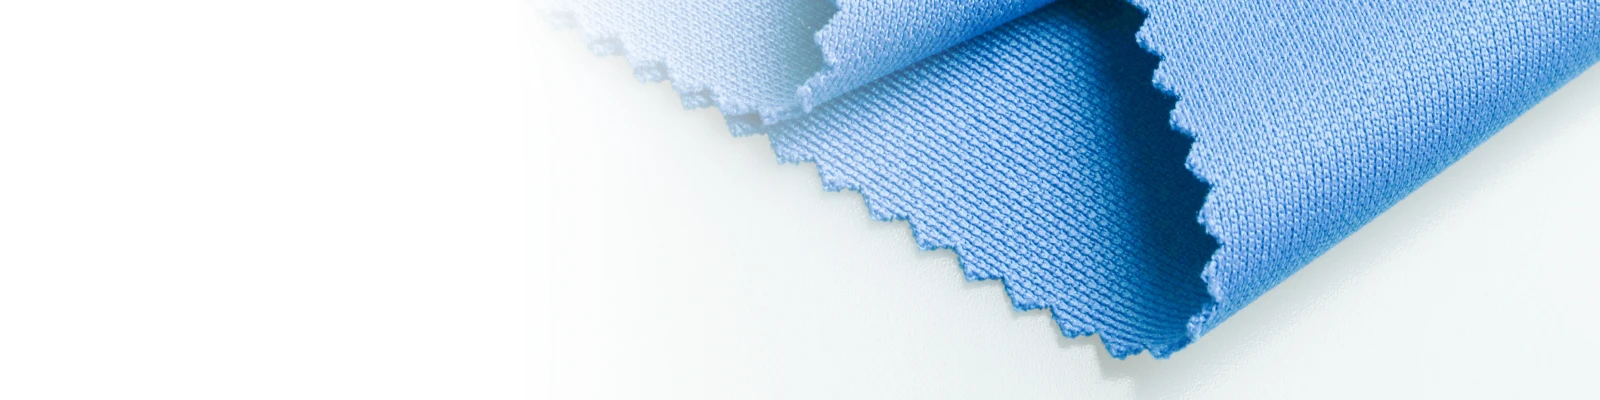 Double Knit and Warm Fabrics